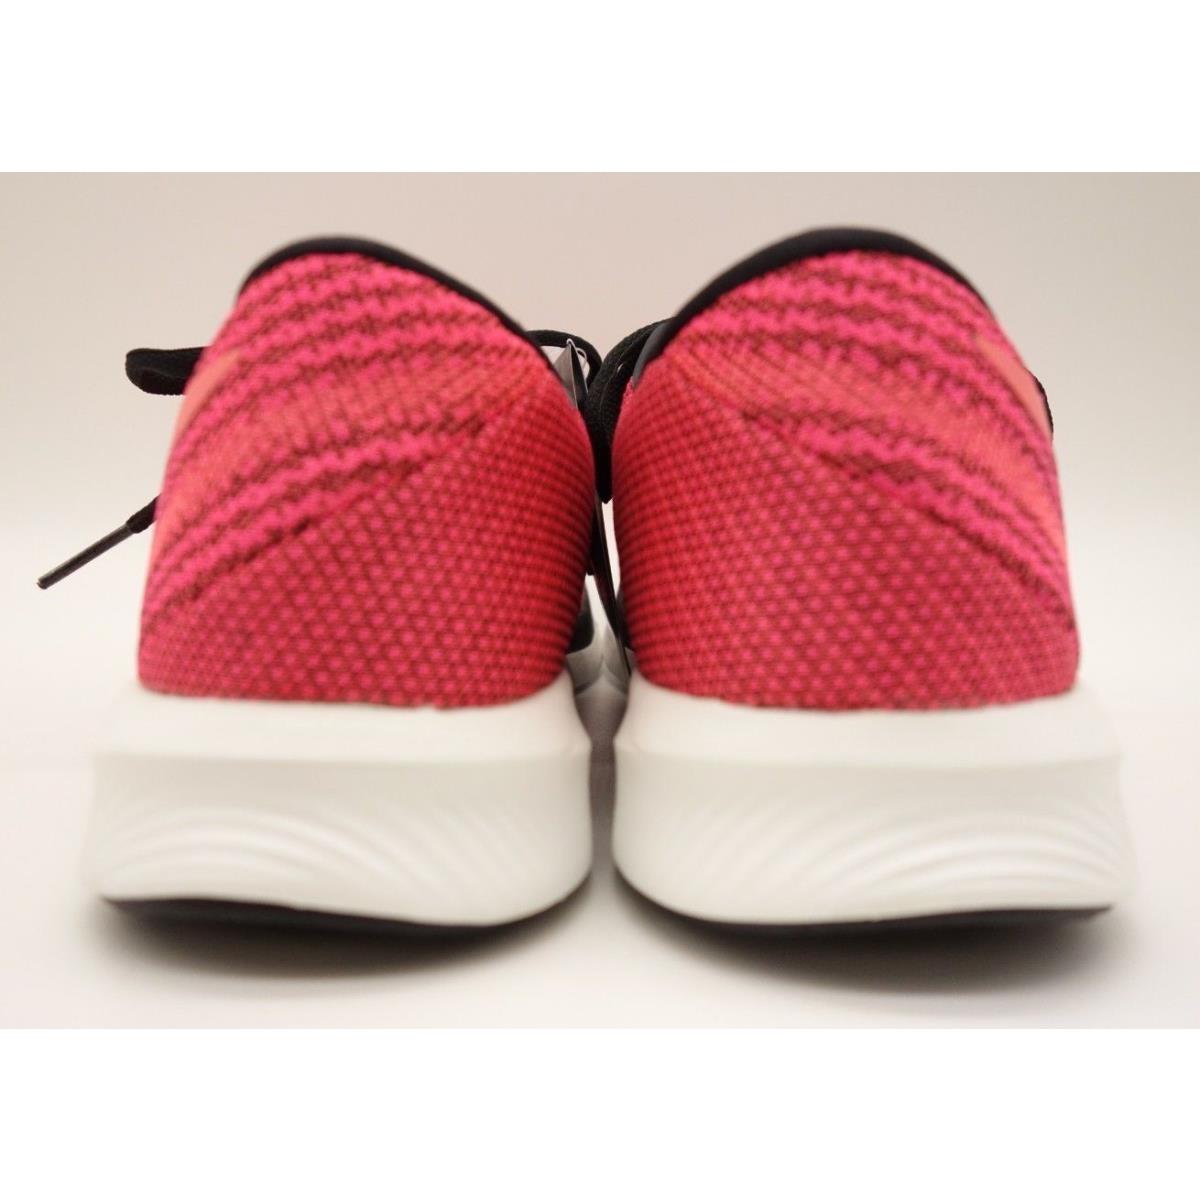 ASICS shoes FuzeX Knit - Pink 3